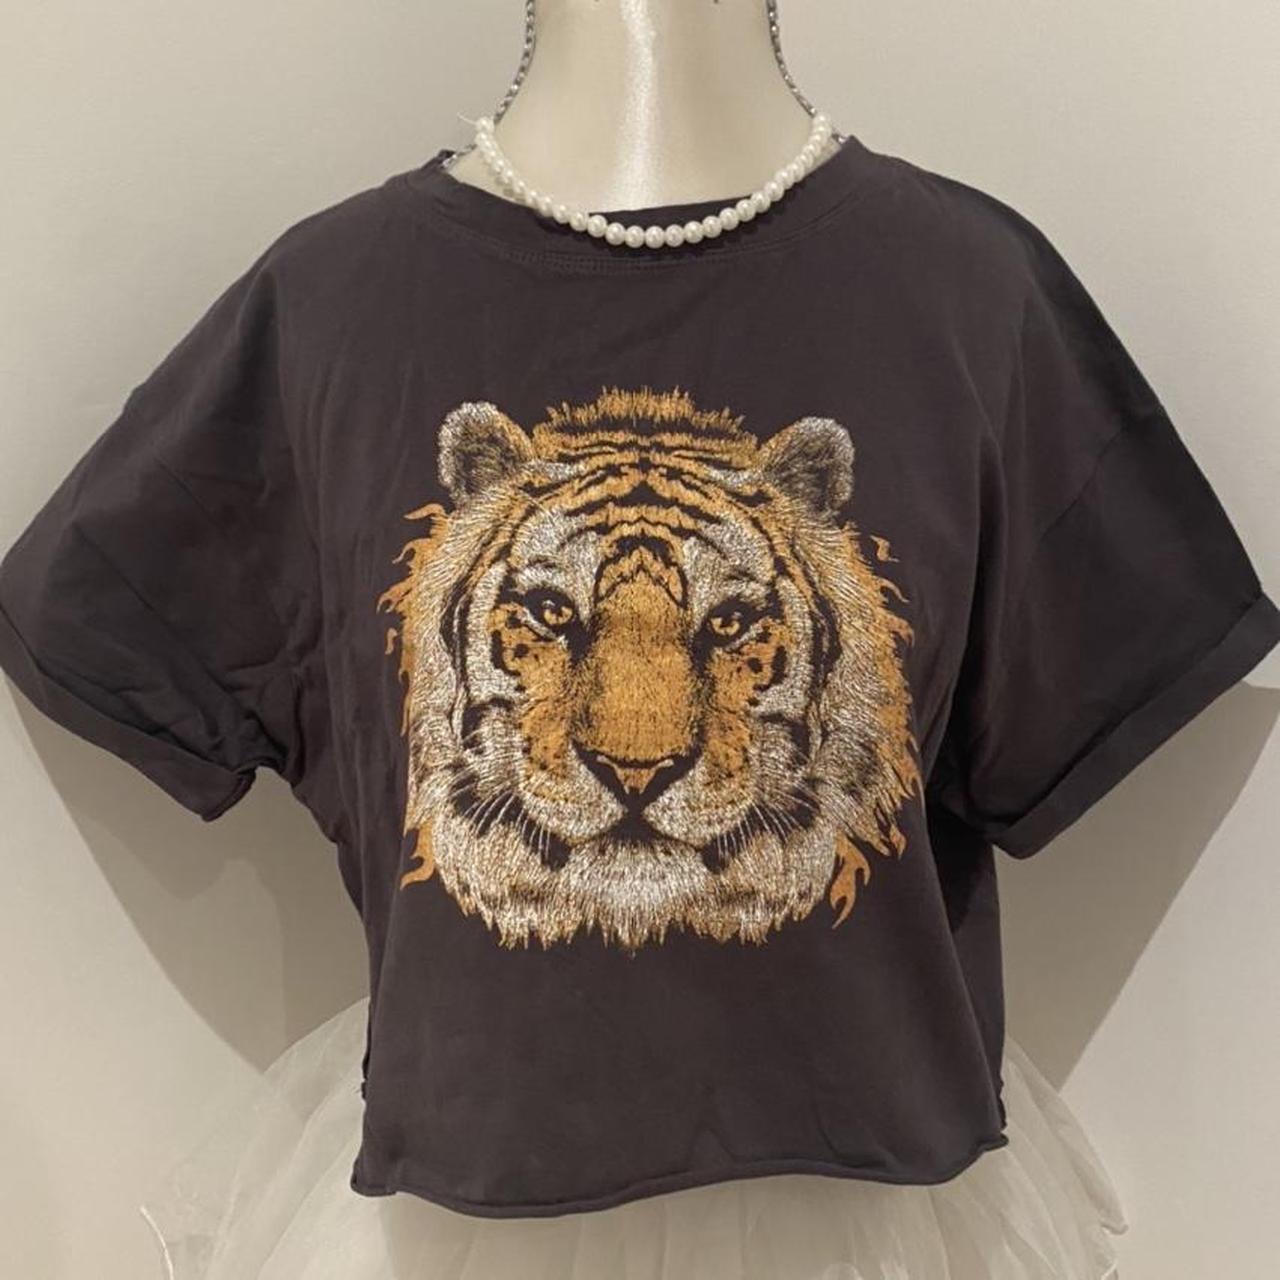 Supre cropped tiger tshirt - size large - hardly... - Depop